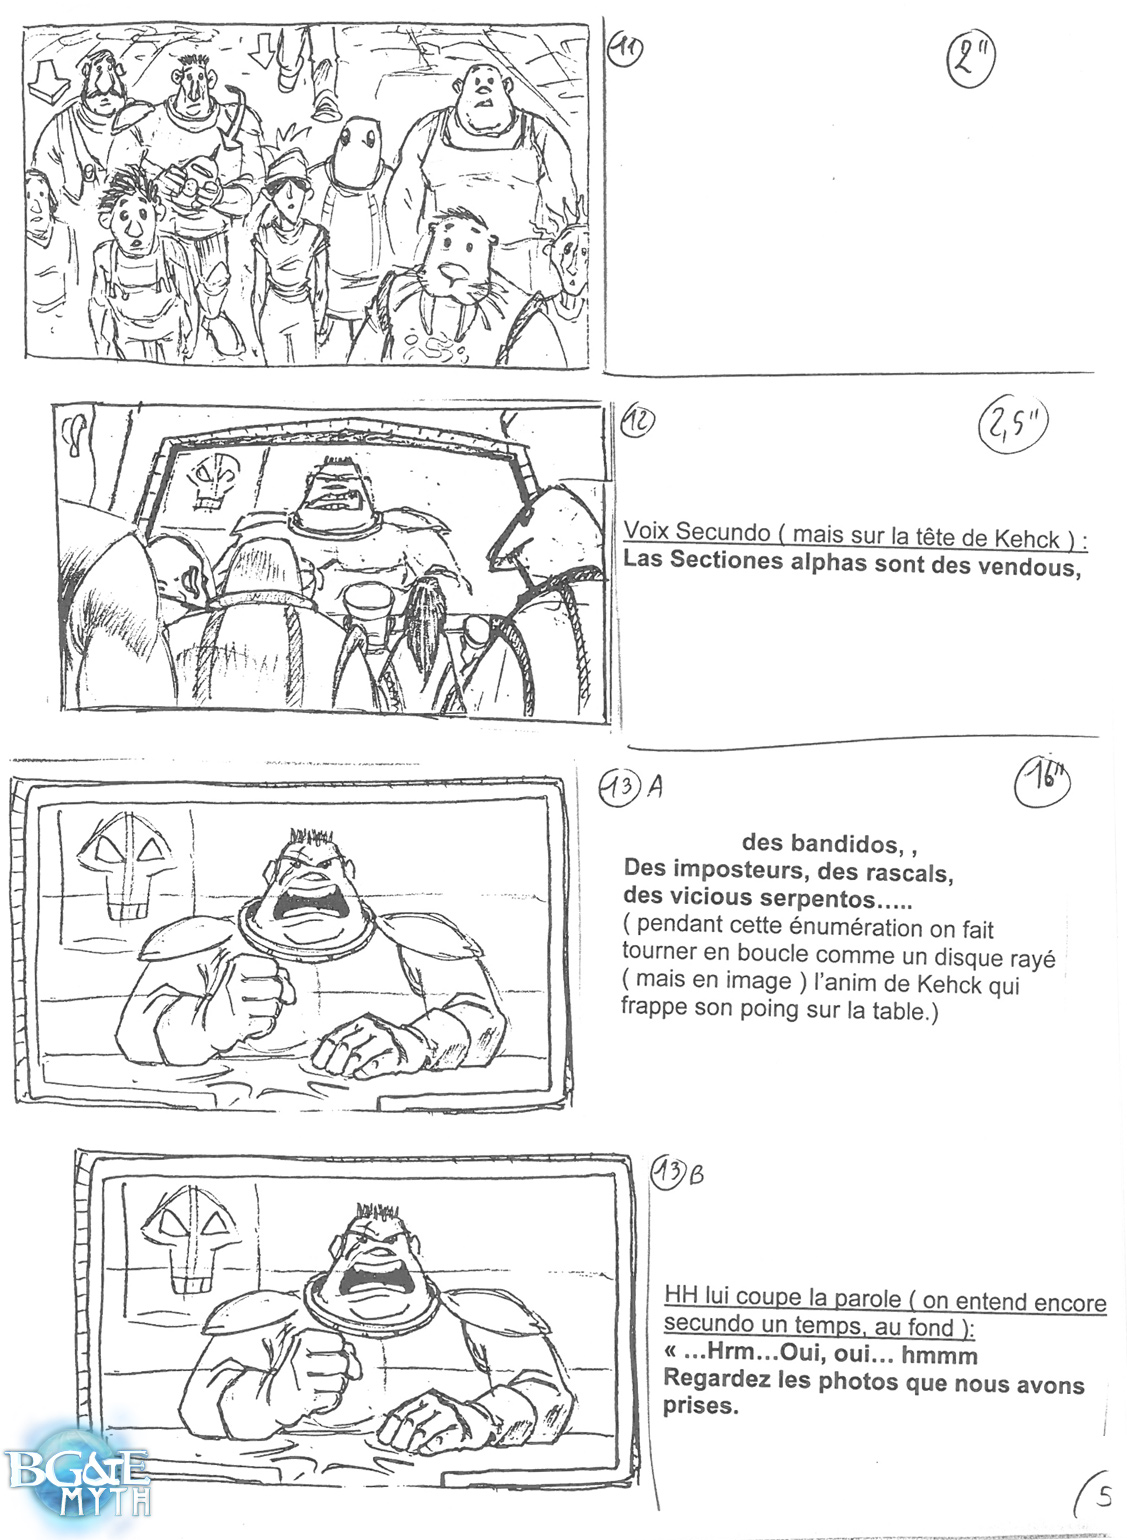 [Storyboard] Diffusion du reportage - Page 12